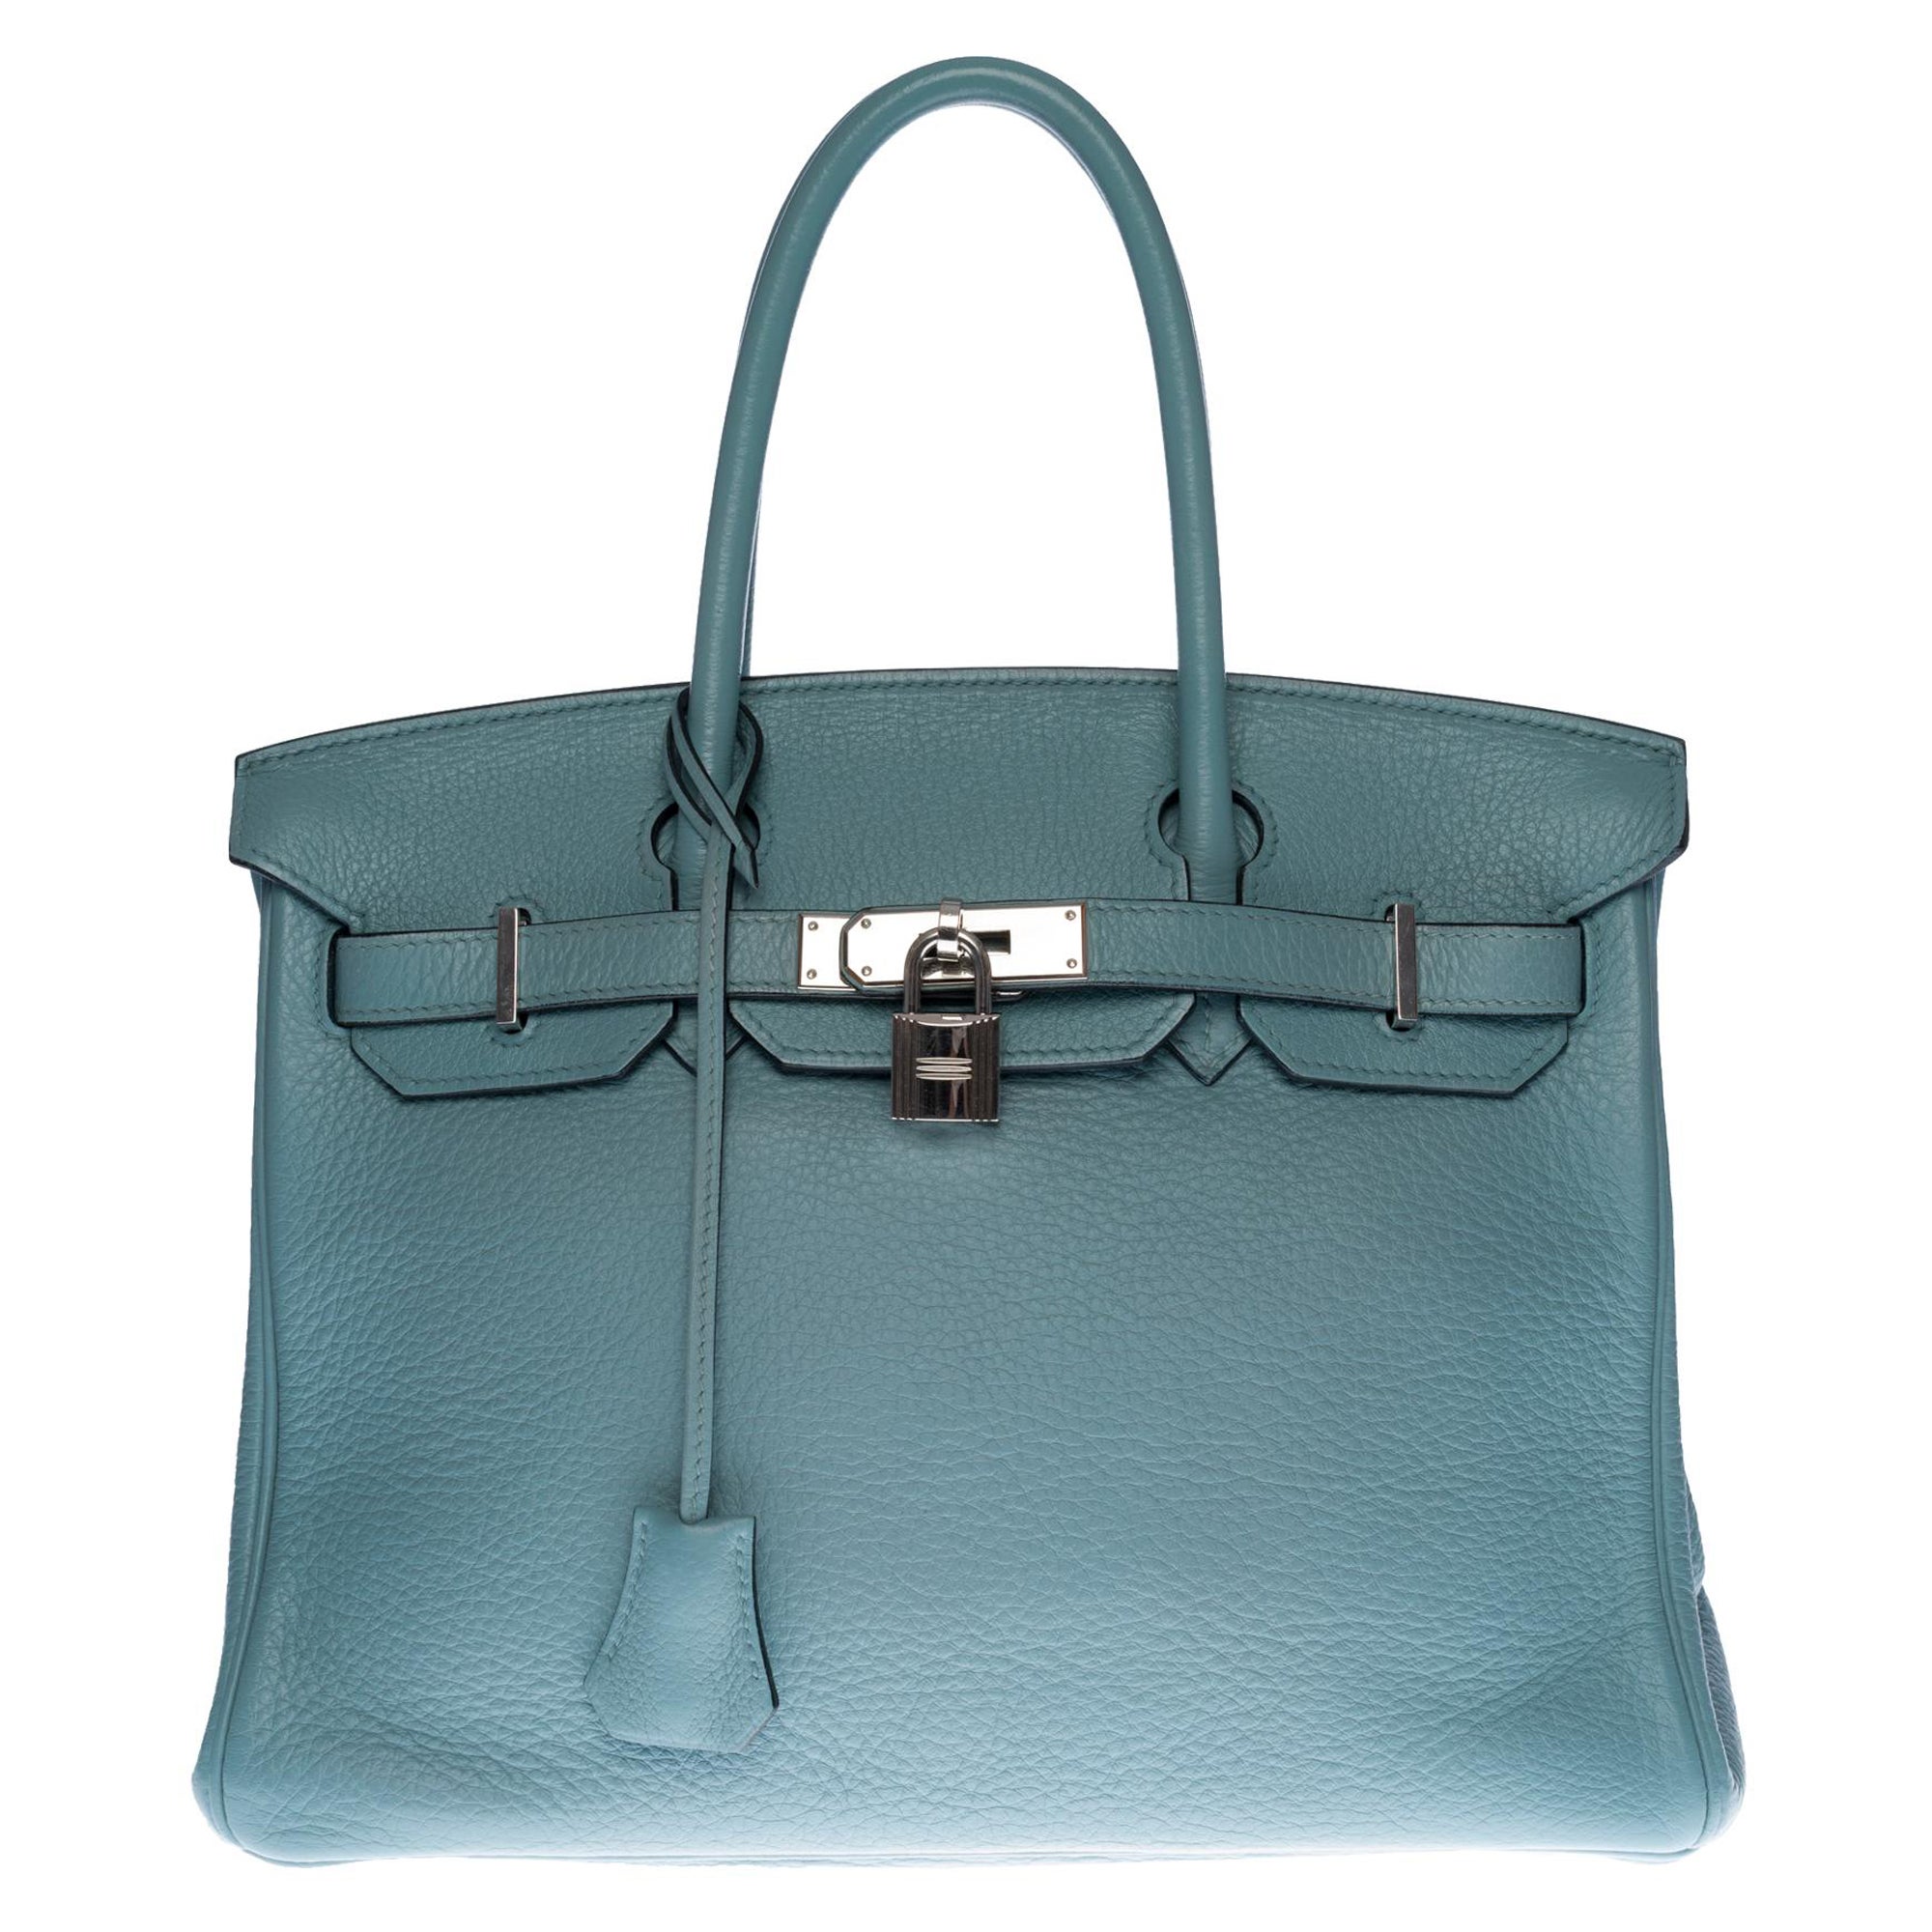 Stunning Hermès Birkin 30 handbag in Bleu ciel Togo leather, SHW